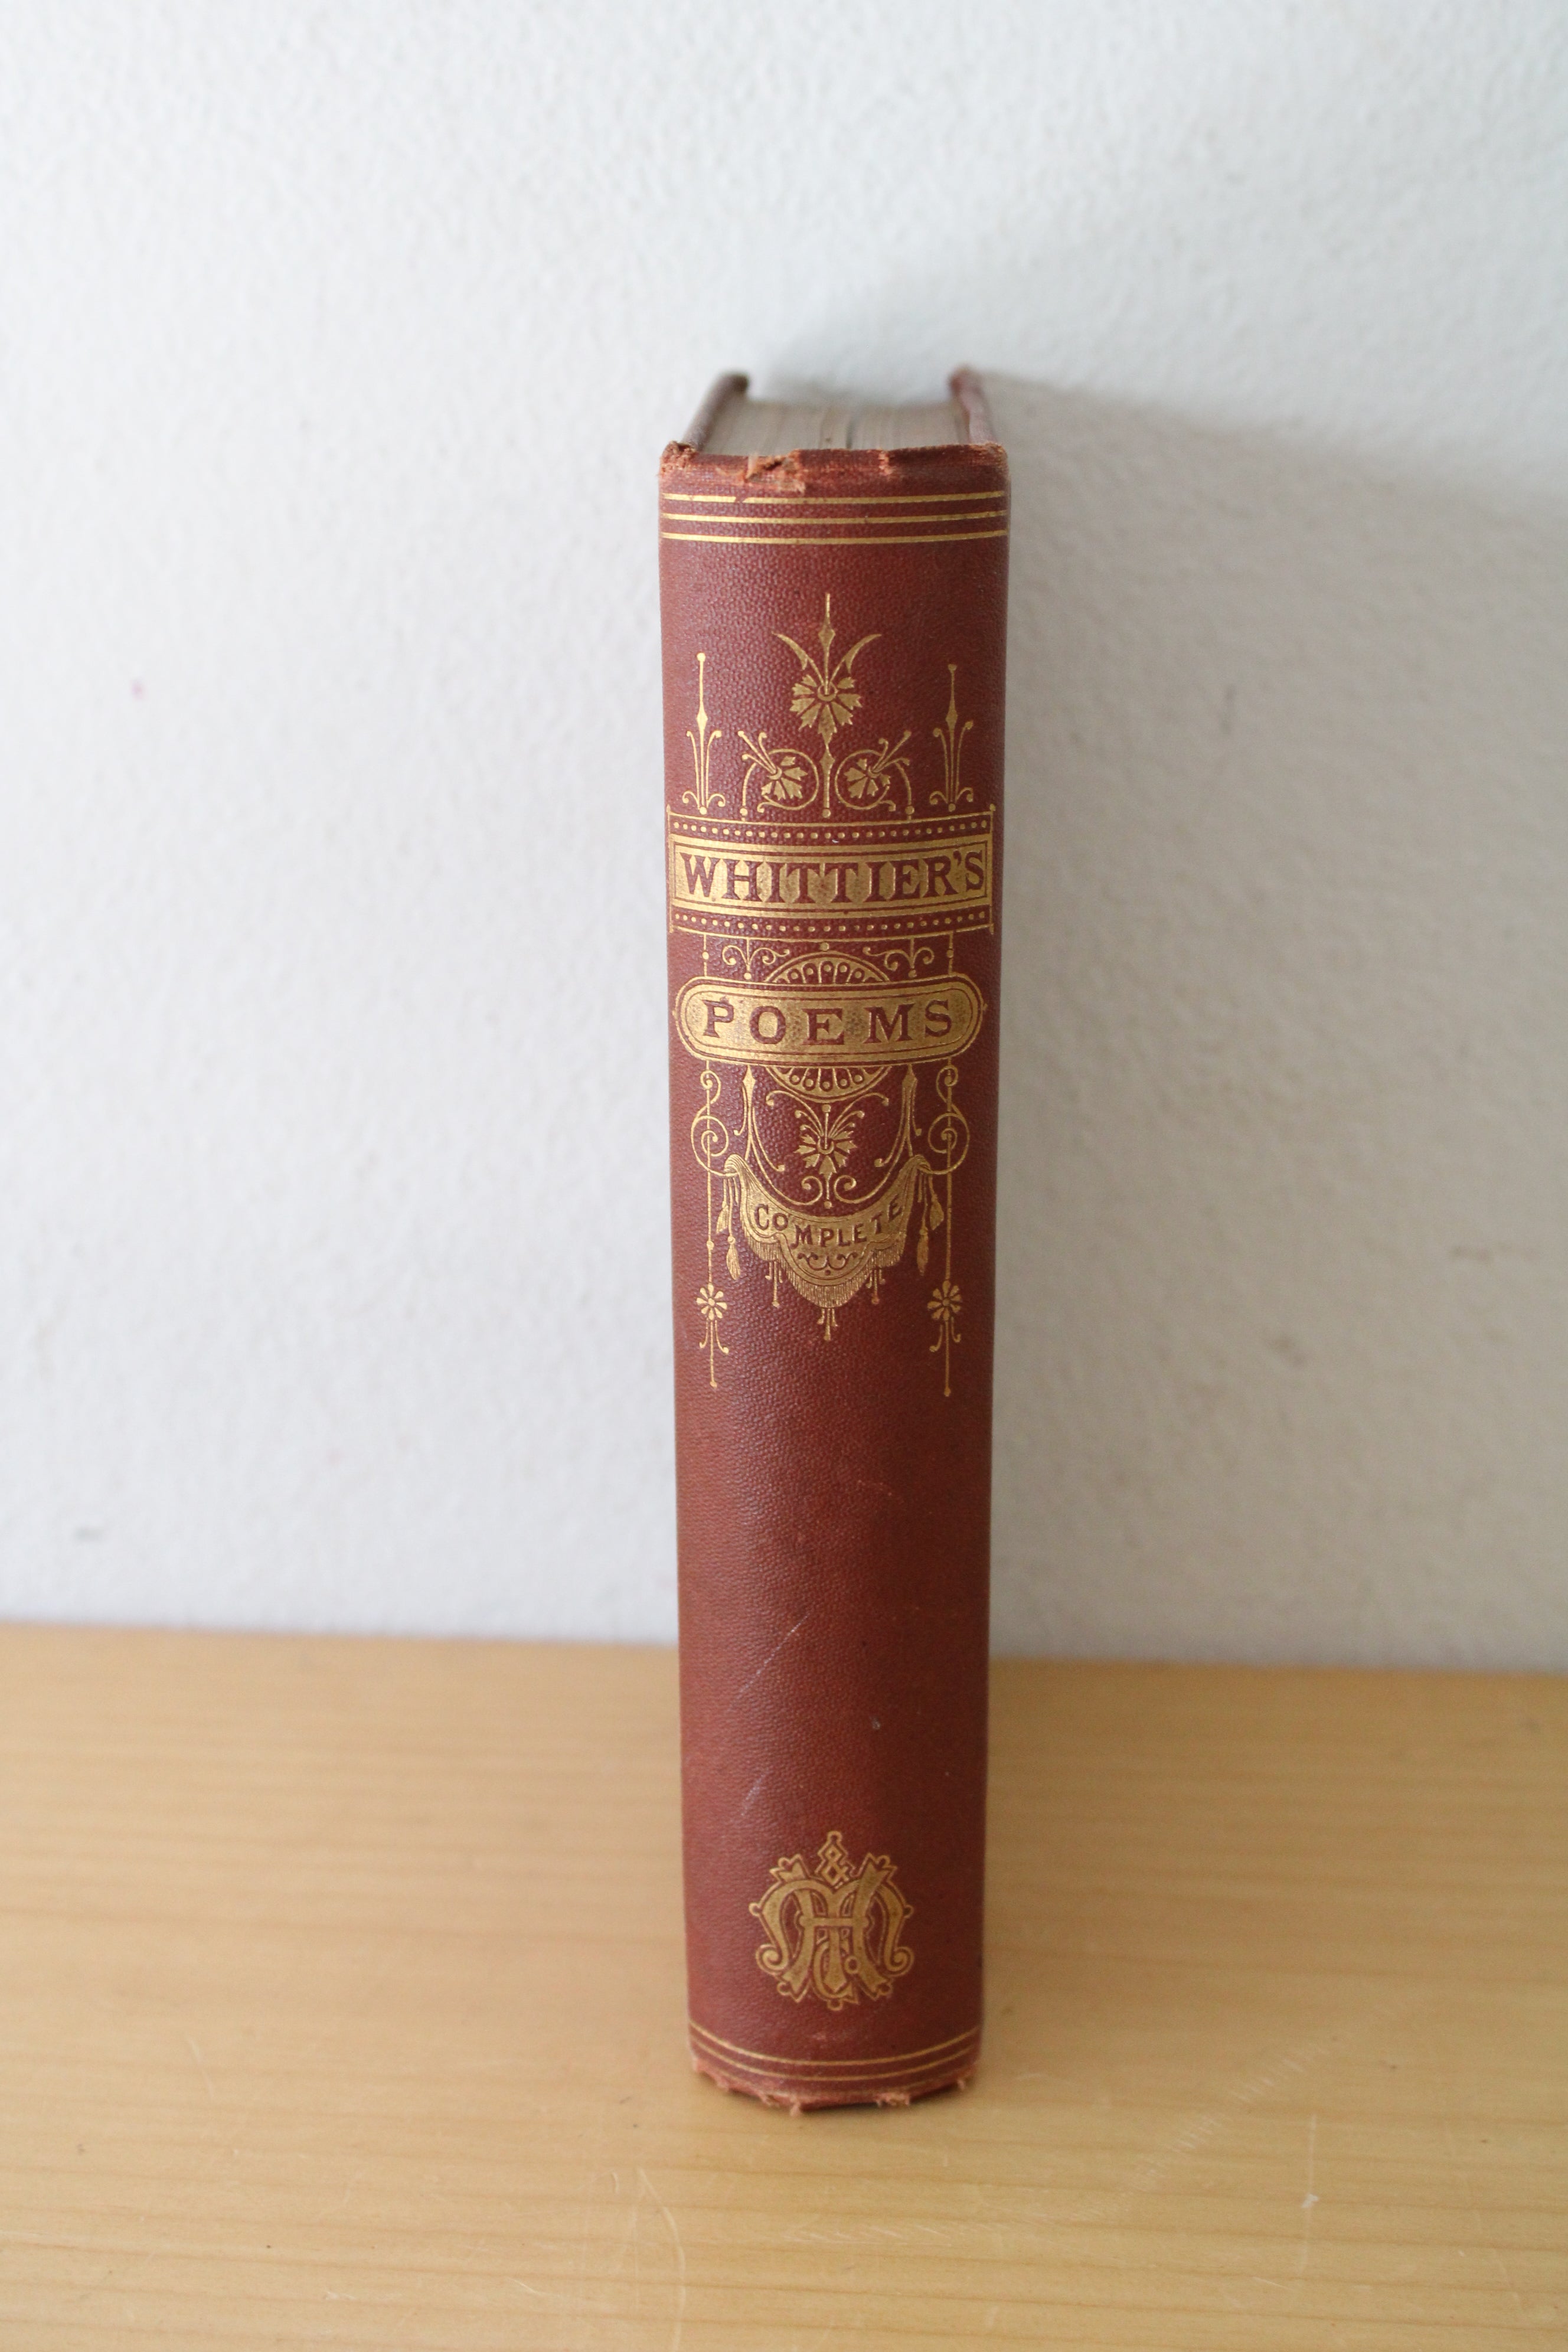 Whittier's Poems Complete 1880 Edition By John Greenleaf Whittier